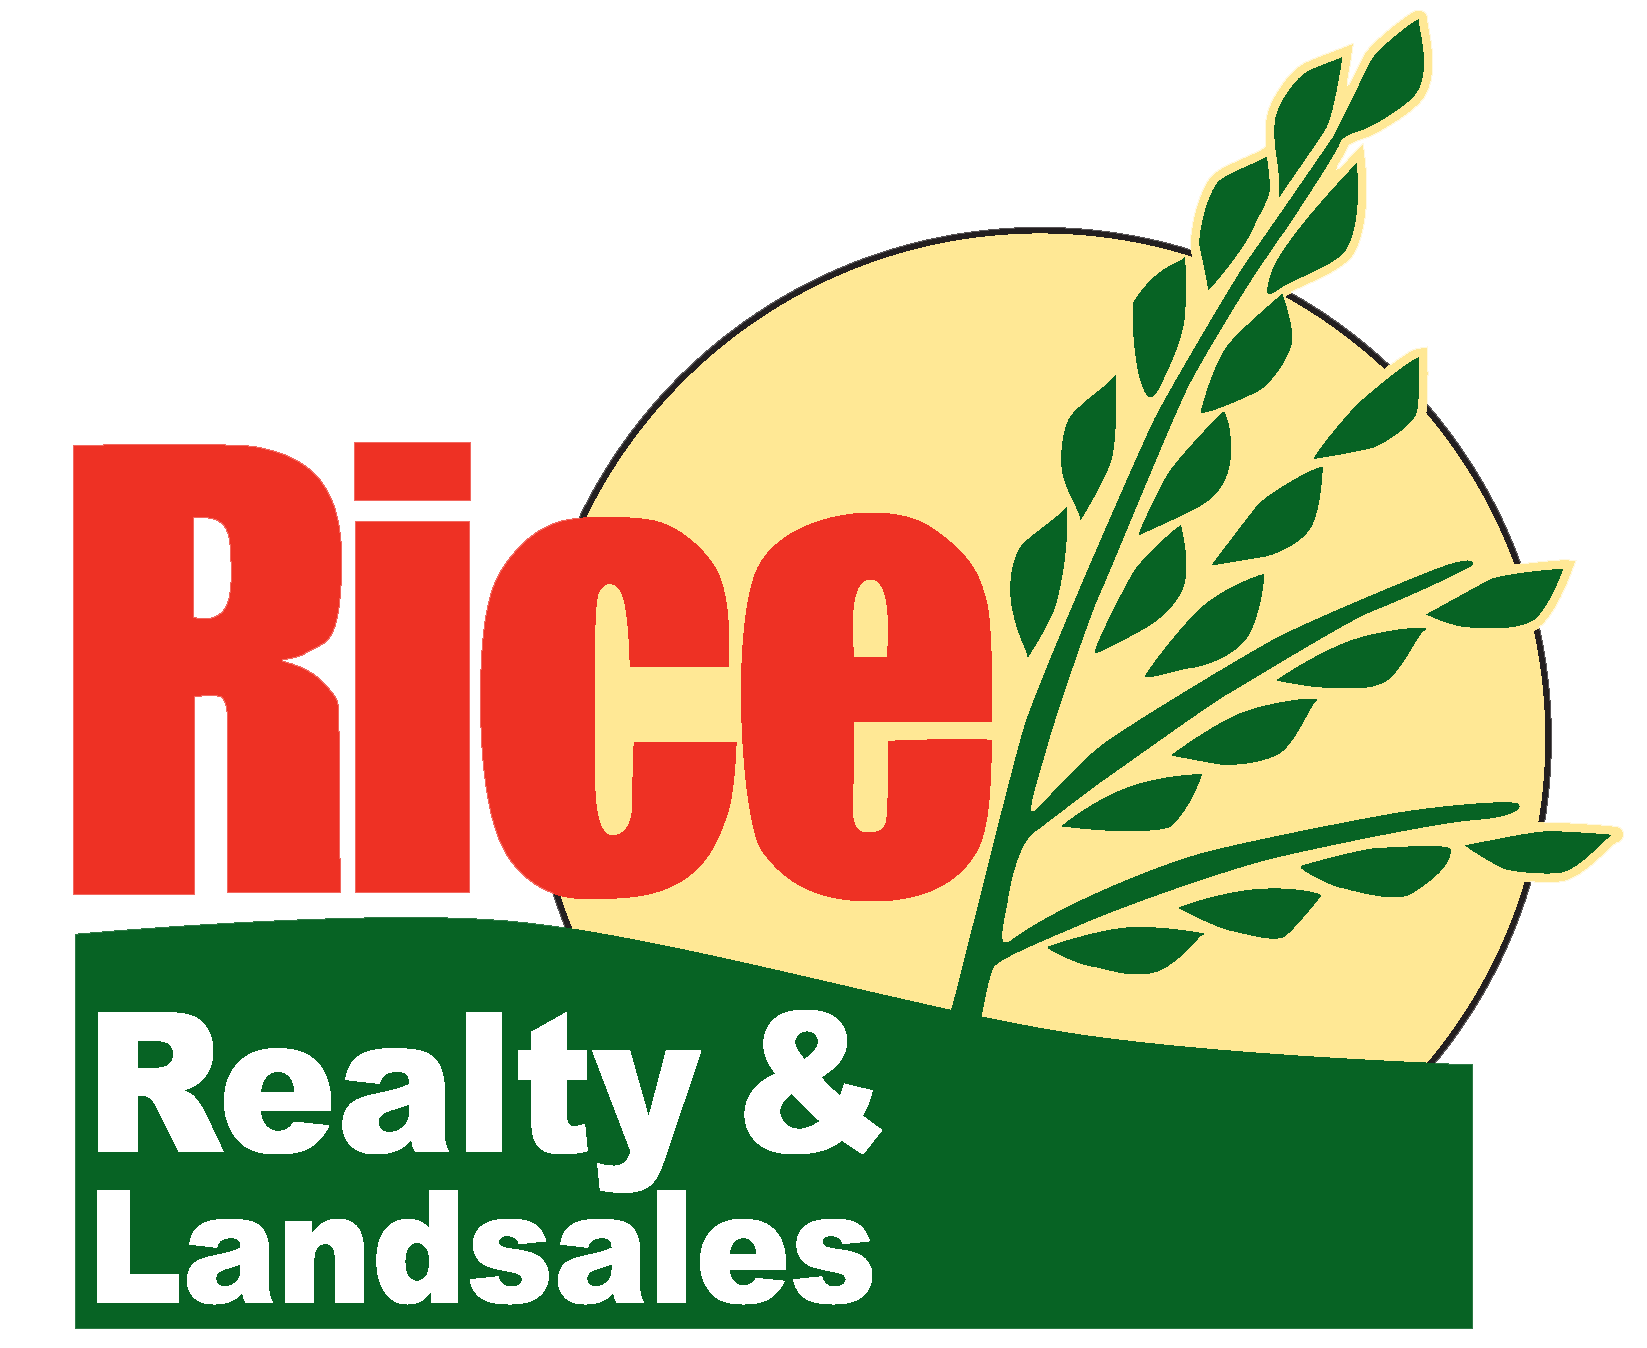 Rice Realty & Landsales logo